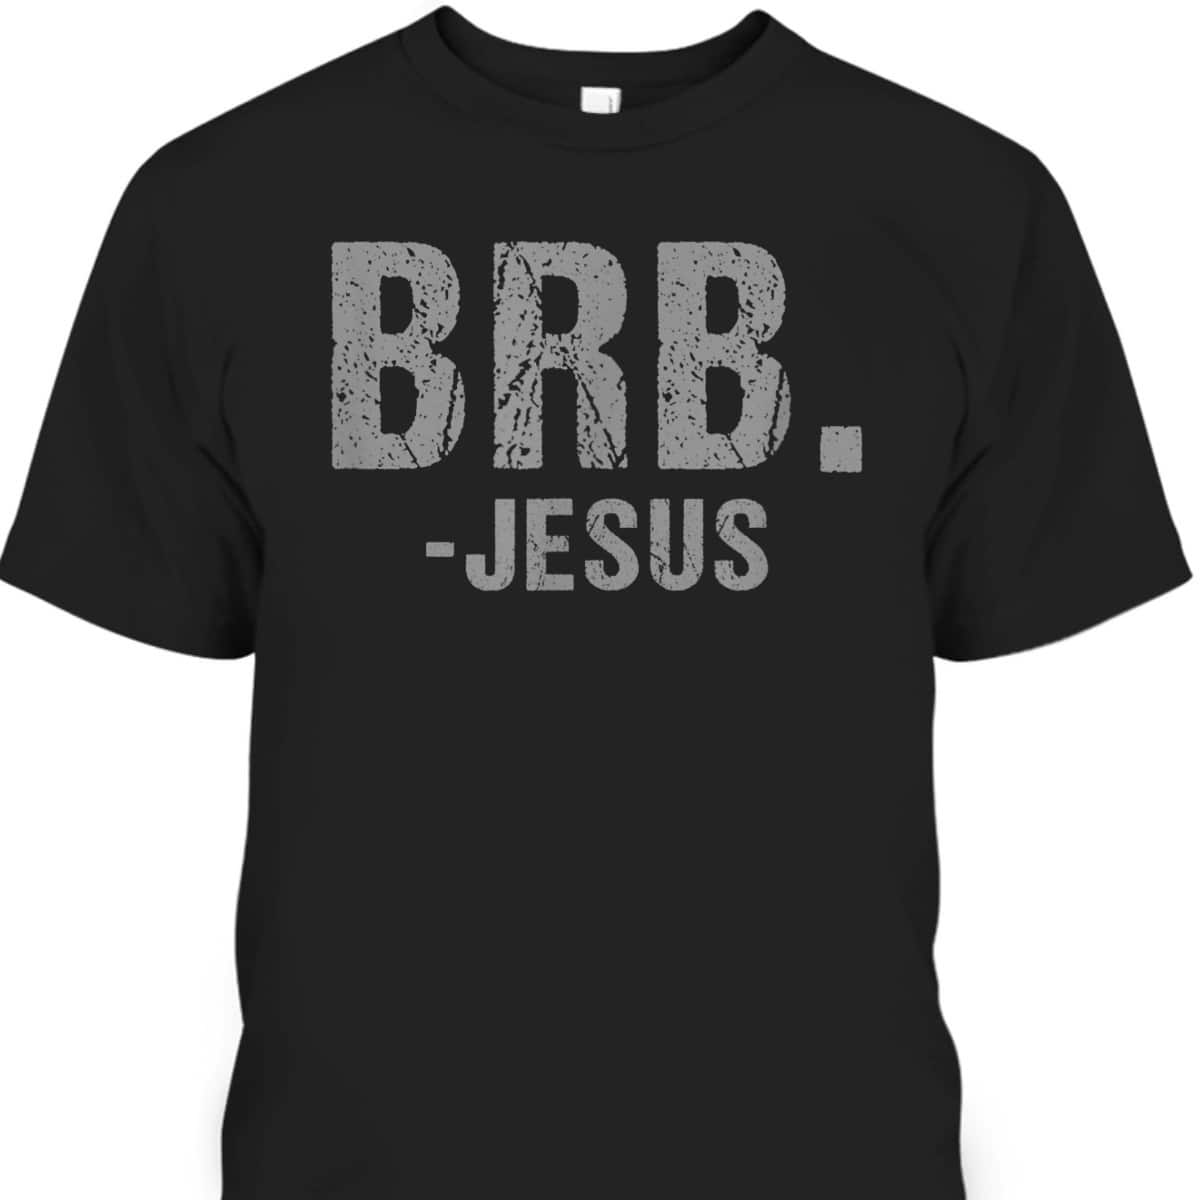 BRB -Jesus Christian Religious Funny Easter Spiritual T-Shirt